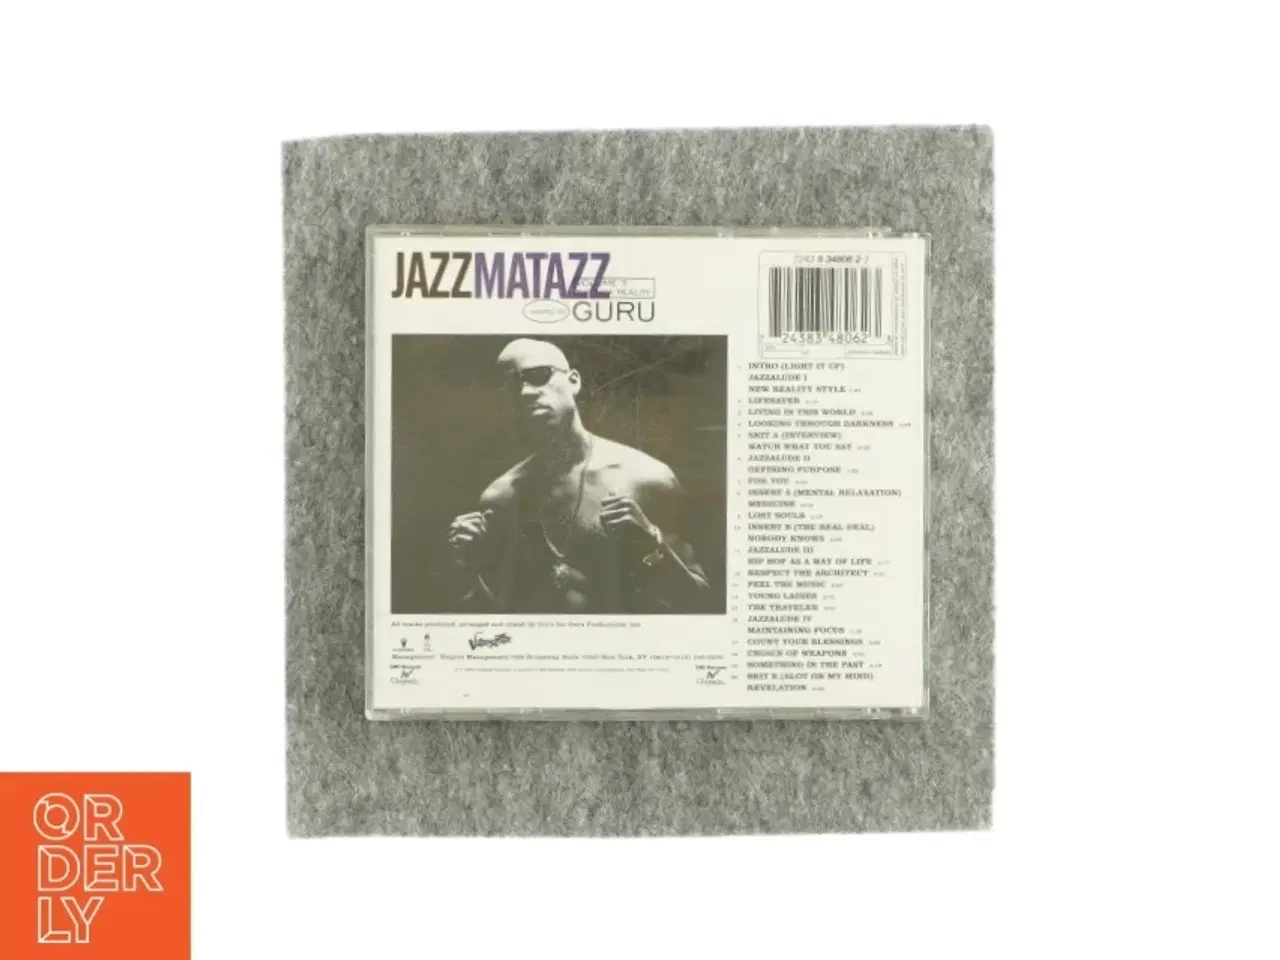 Billede 2 - Cd med Jazzmatazz